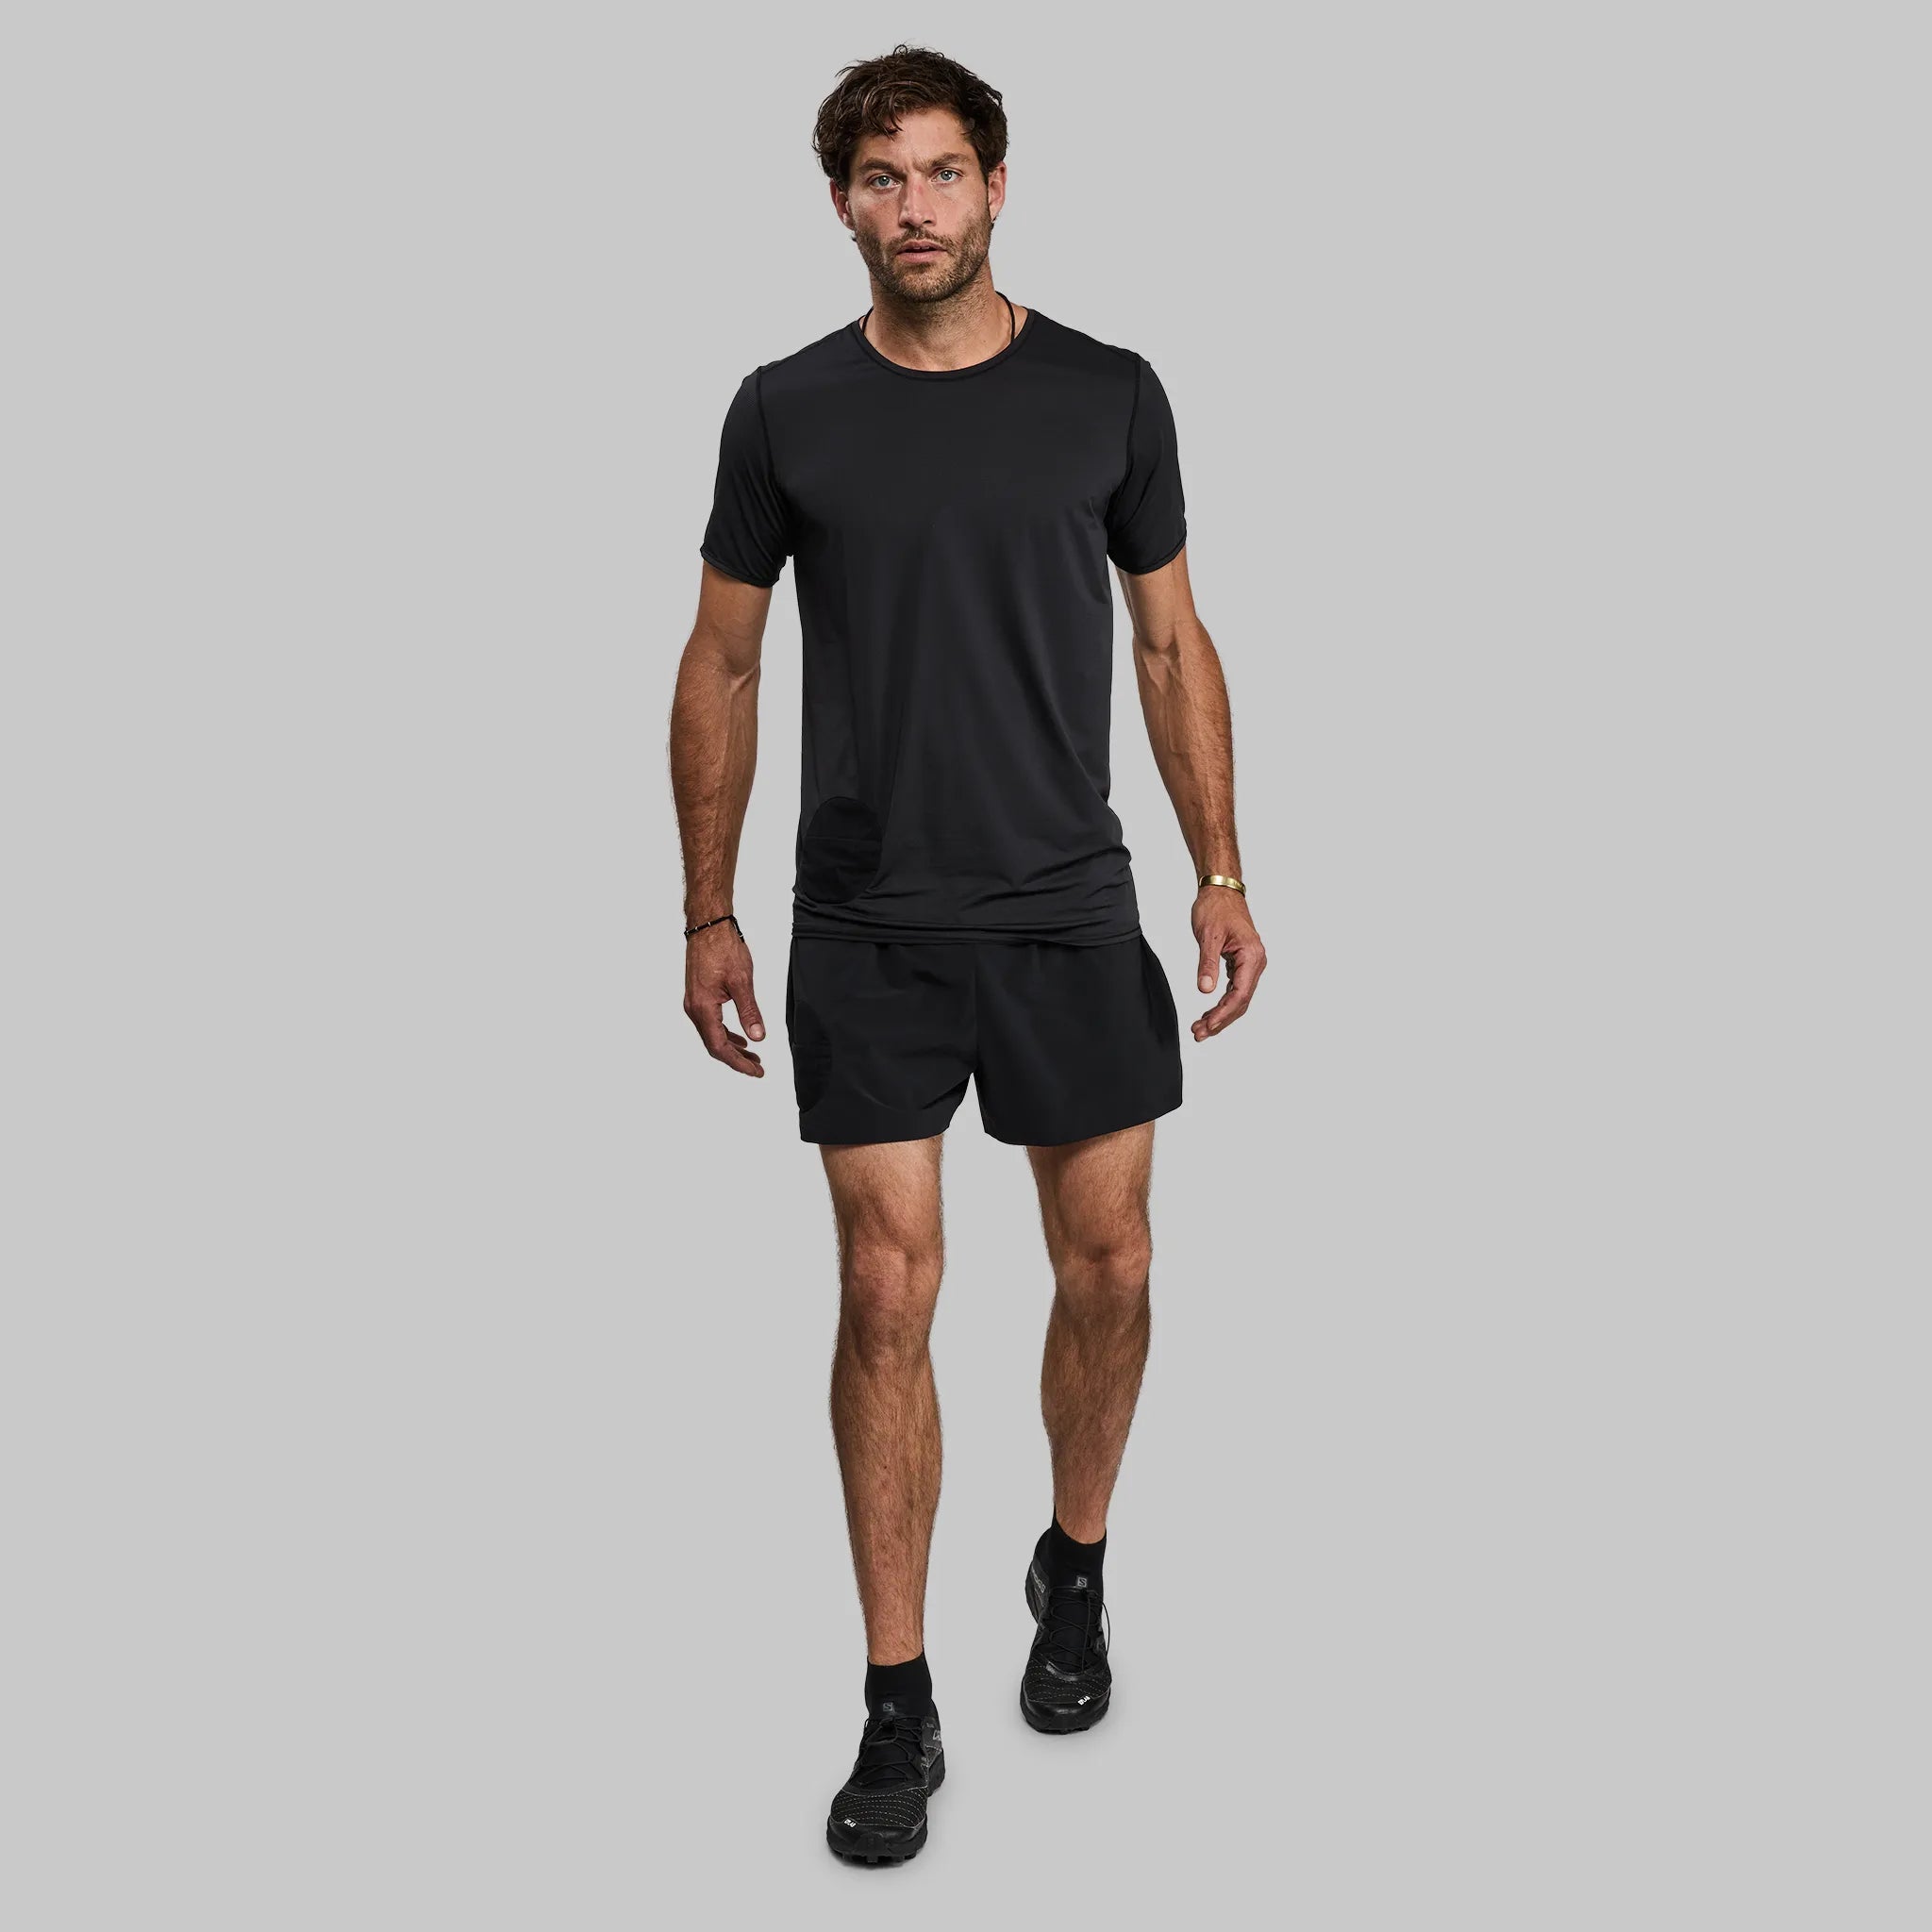 Race to Zero Shorts. Black edition – Vollebak